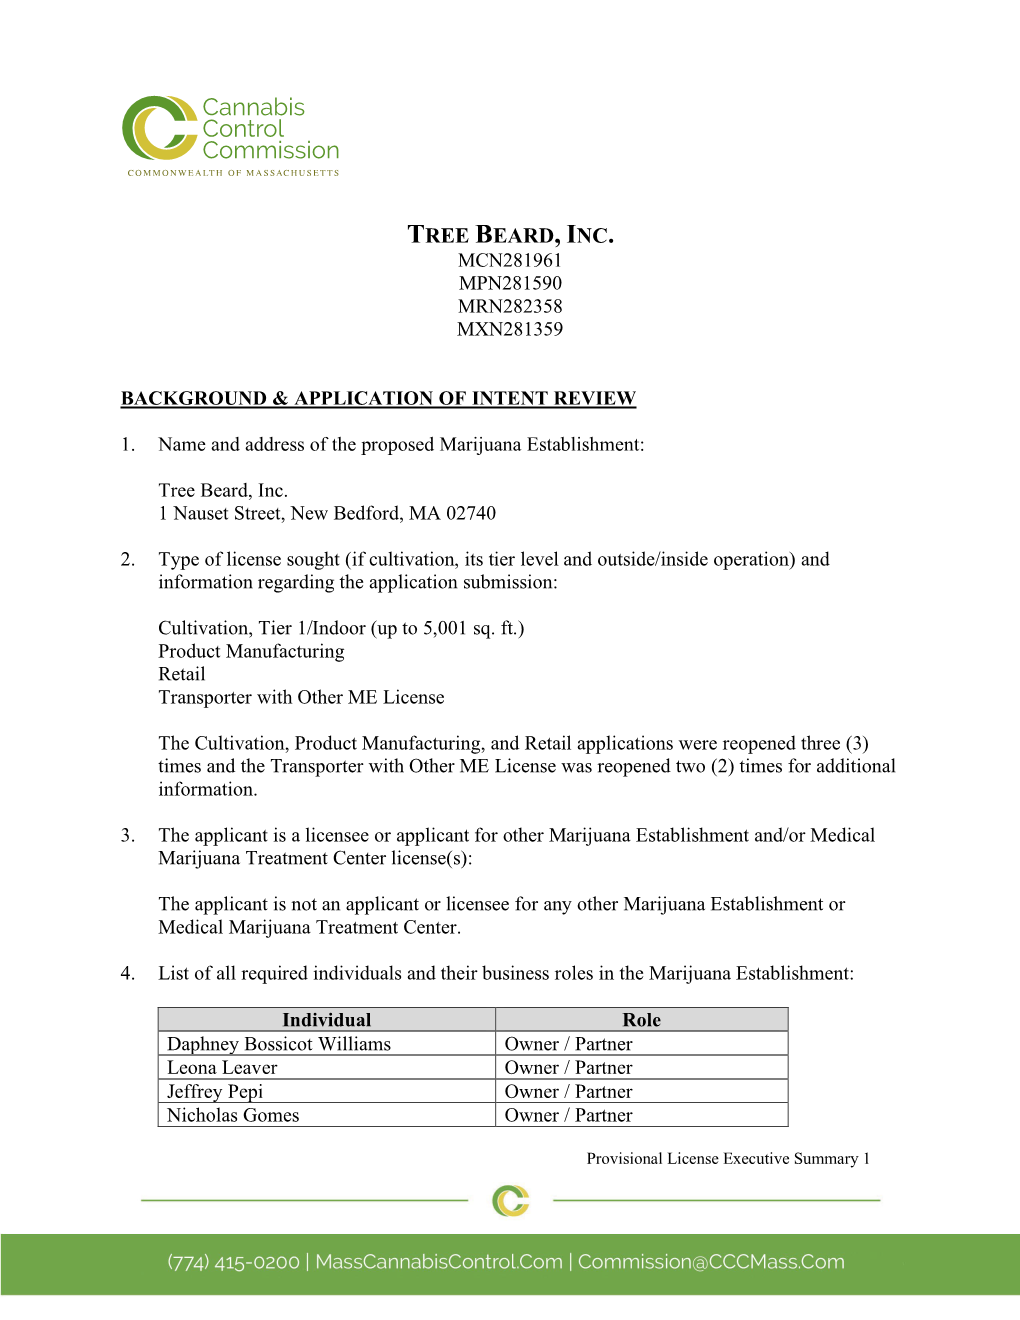 Provisional License – Executive Summary – Tree Beard, Inc